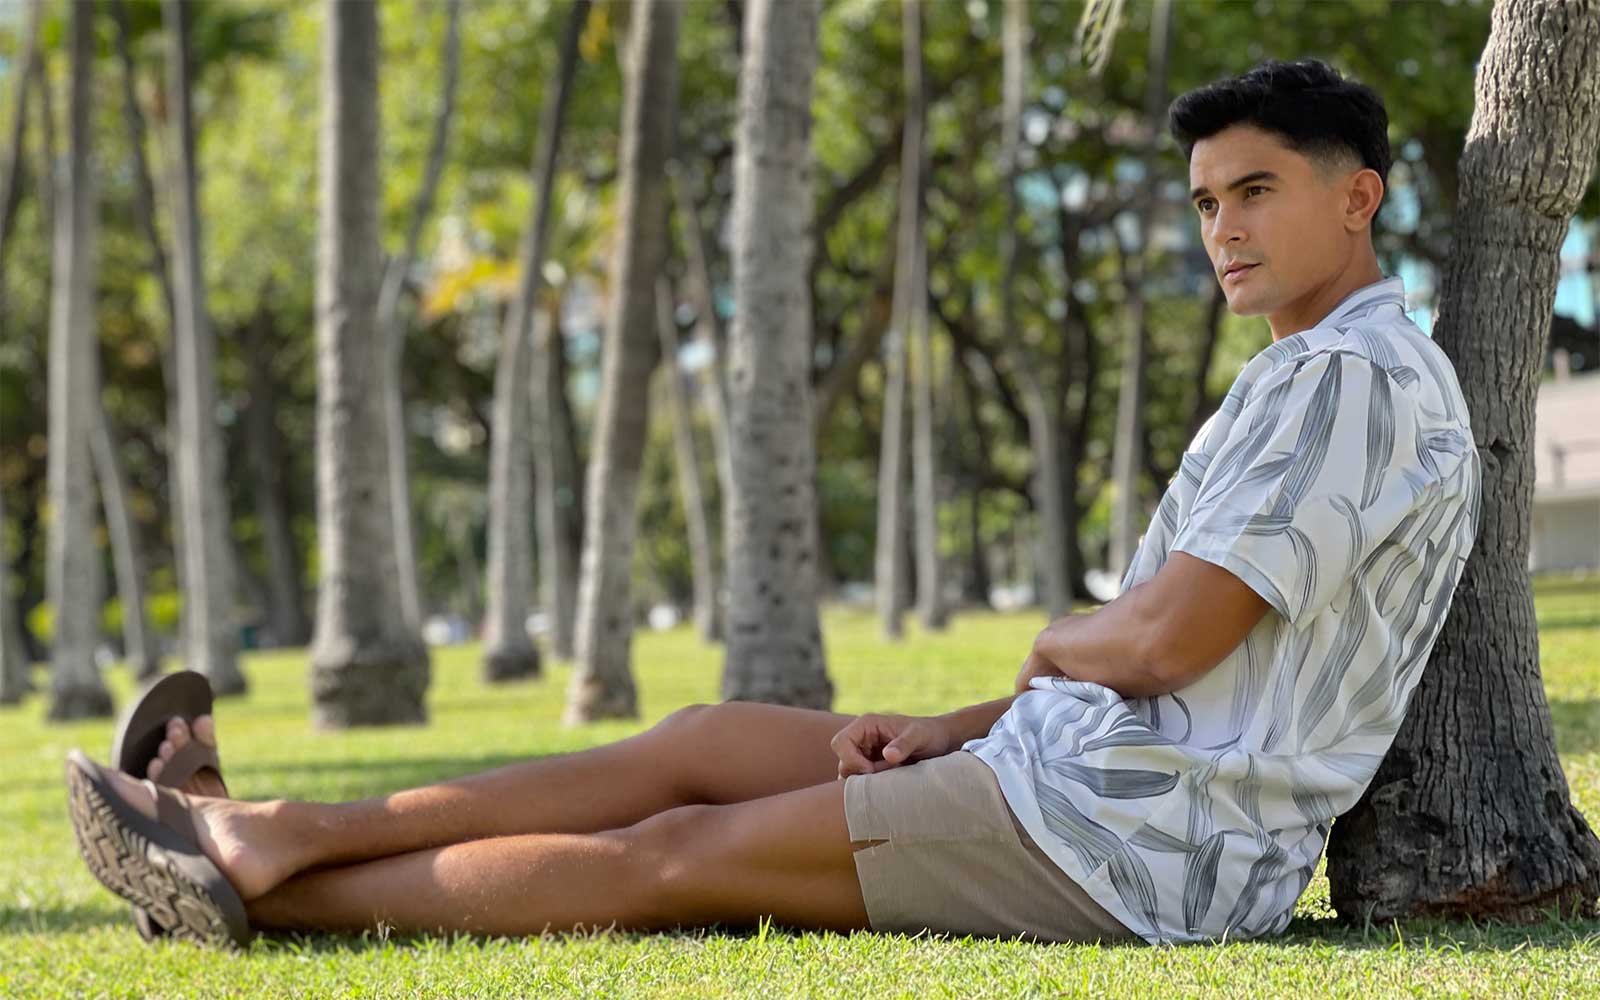 Sitting Next to Palm Tree in Aloha Shirt